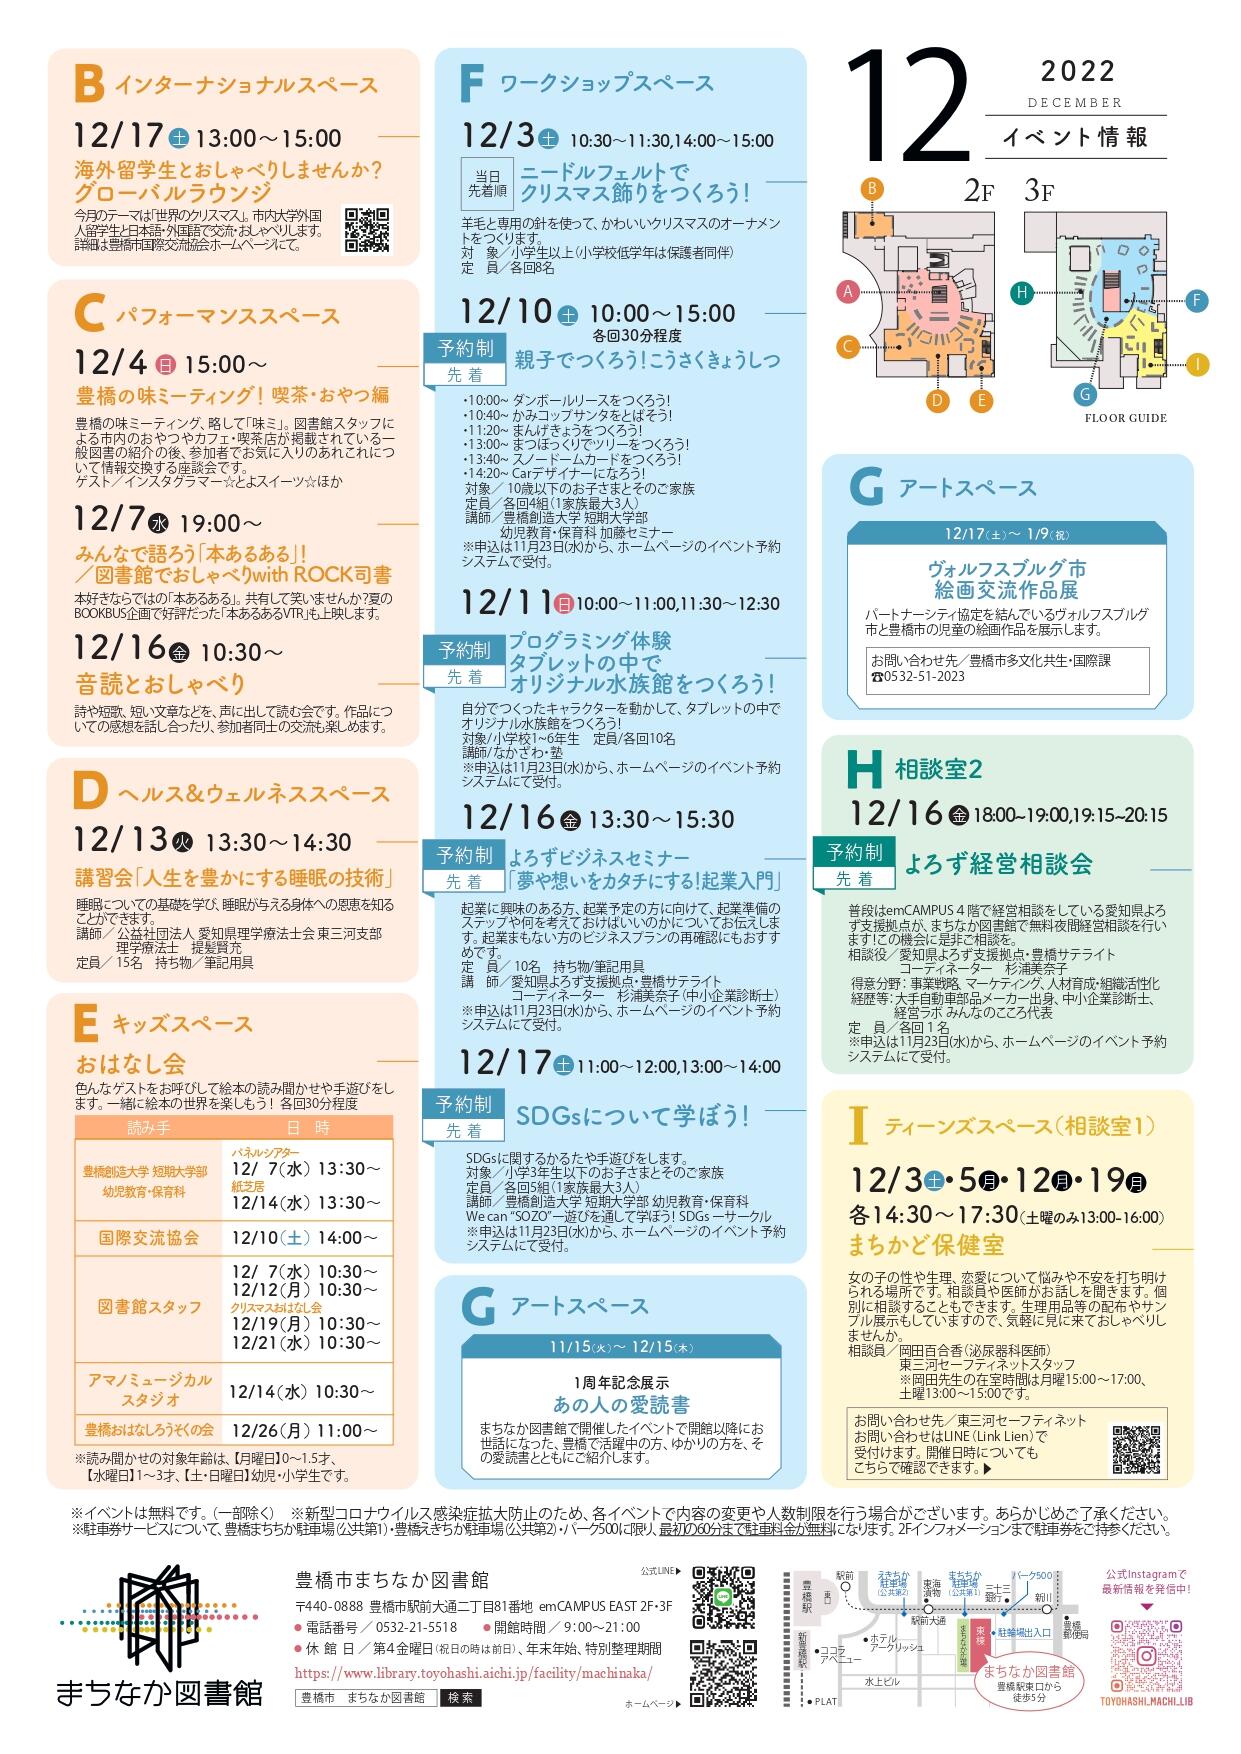 https://www.library.toyohashi.aichi.jp/facility/machinaka/event/5a9212076a5883ac71e13ae8f1cadde6.jpg